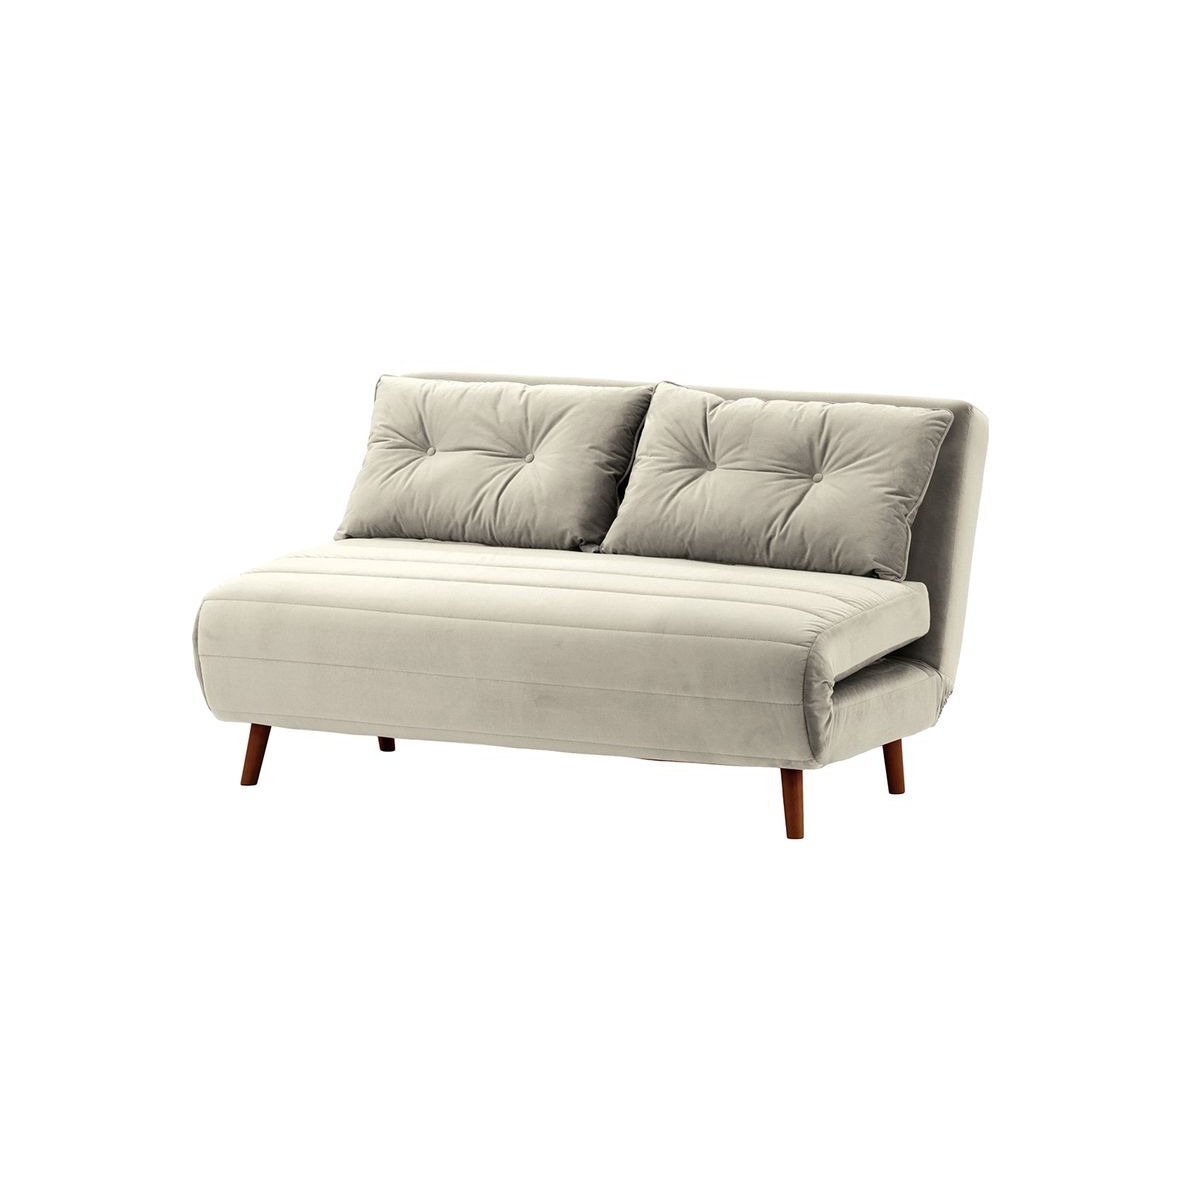 Flic Large Double Sofa Bed - width 142 cm, silver, Leg colour: aveo - image 1